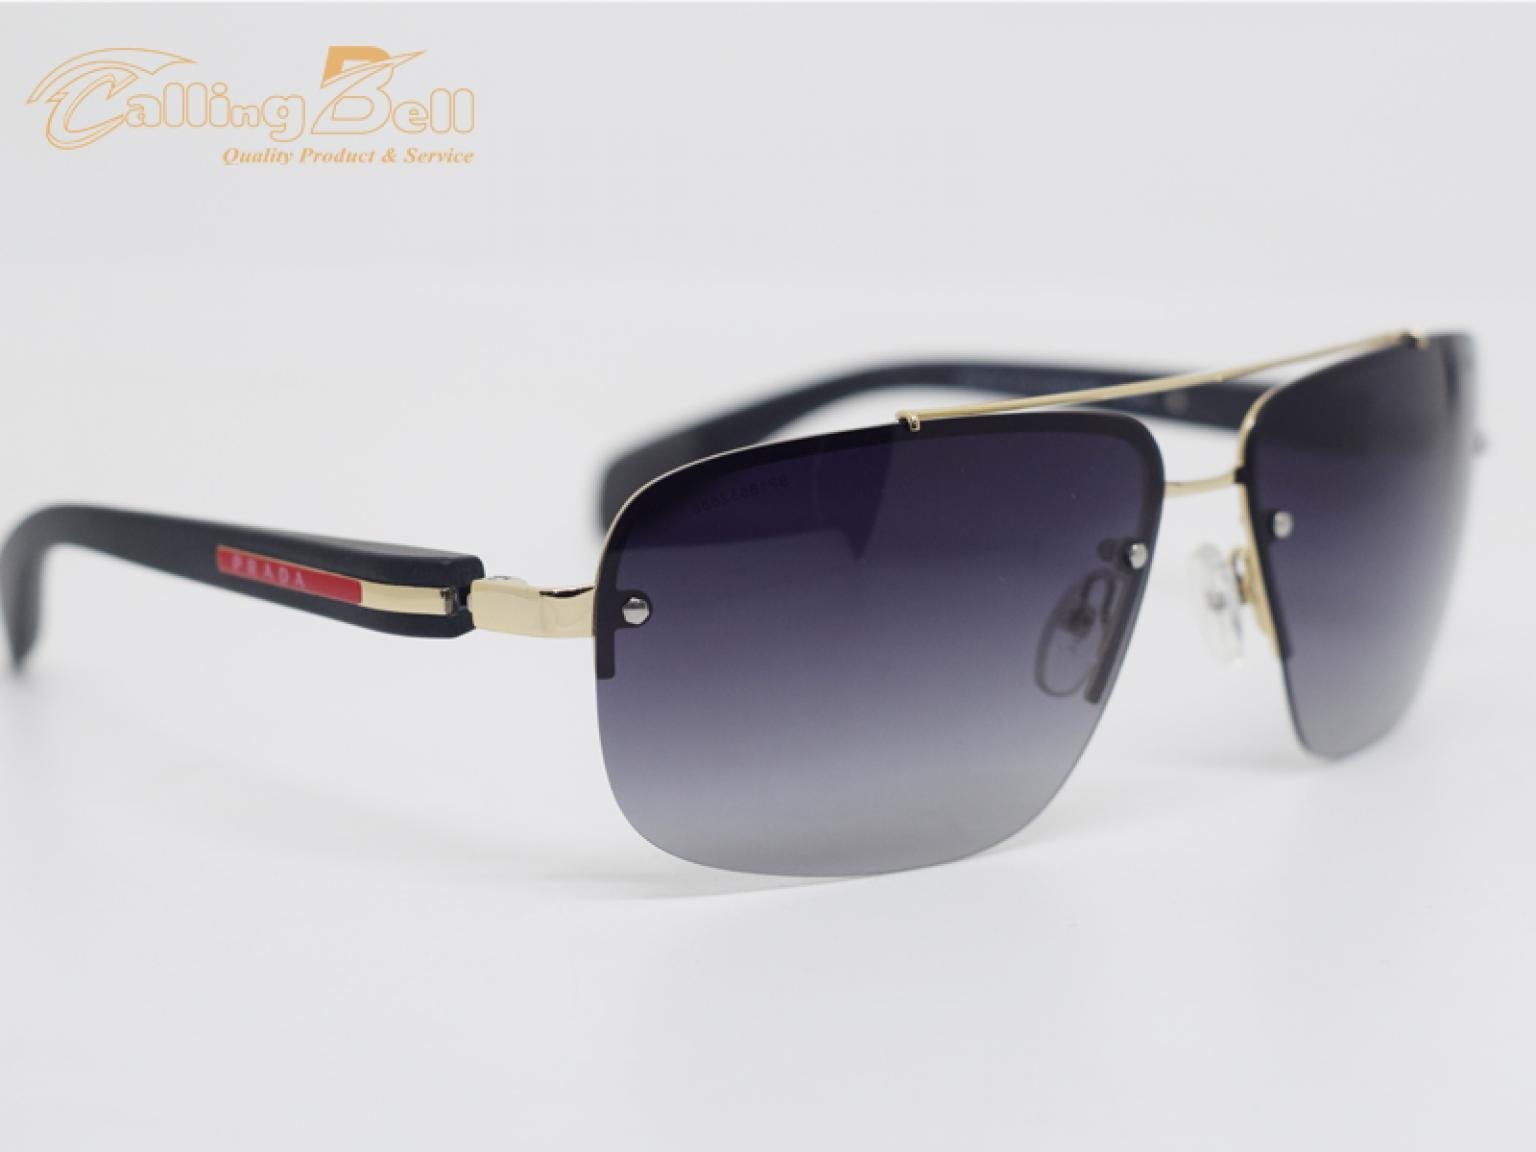 Rimless High Quality Polarized Rectangular Black Stylish Premium Sunglass For Men Women Uv400 Protected |Cbl-161|